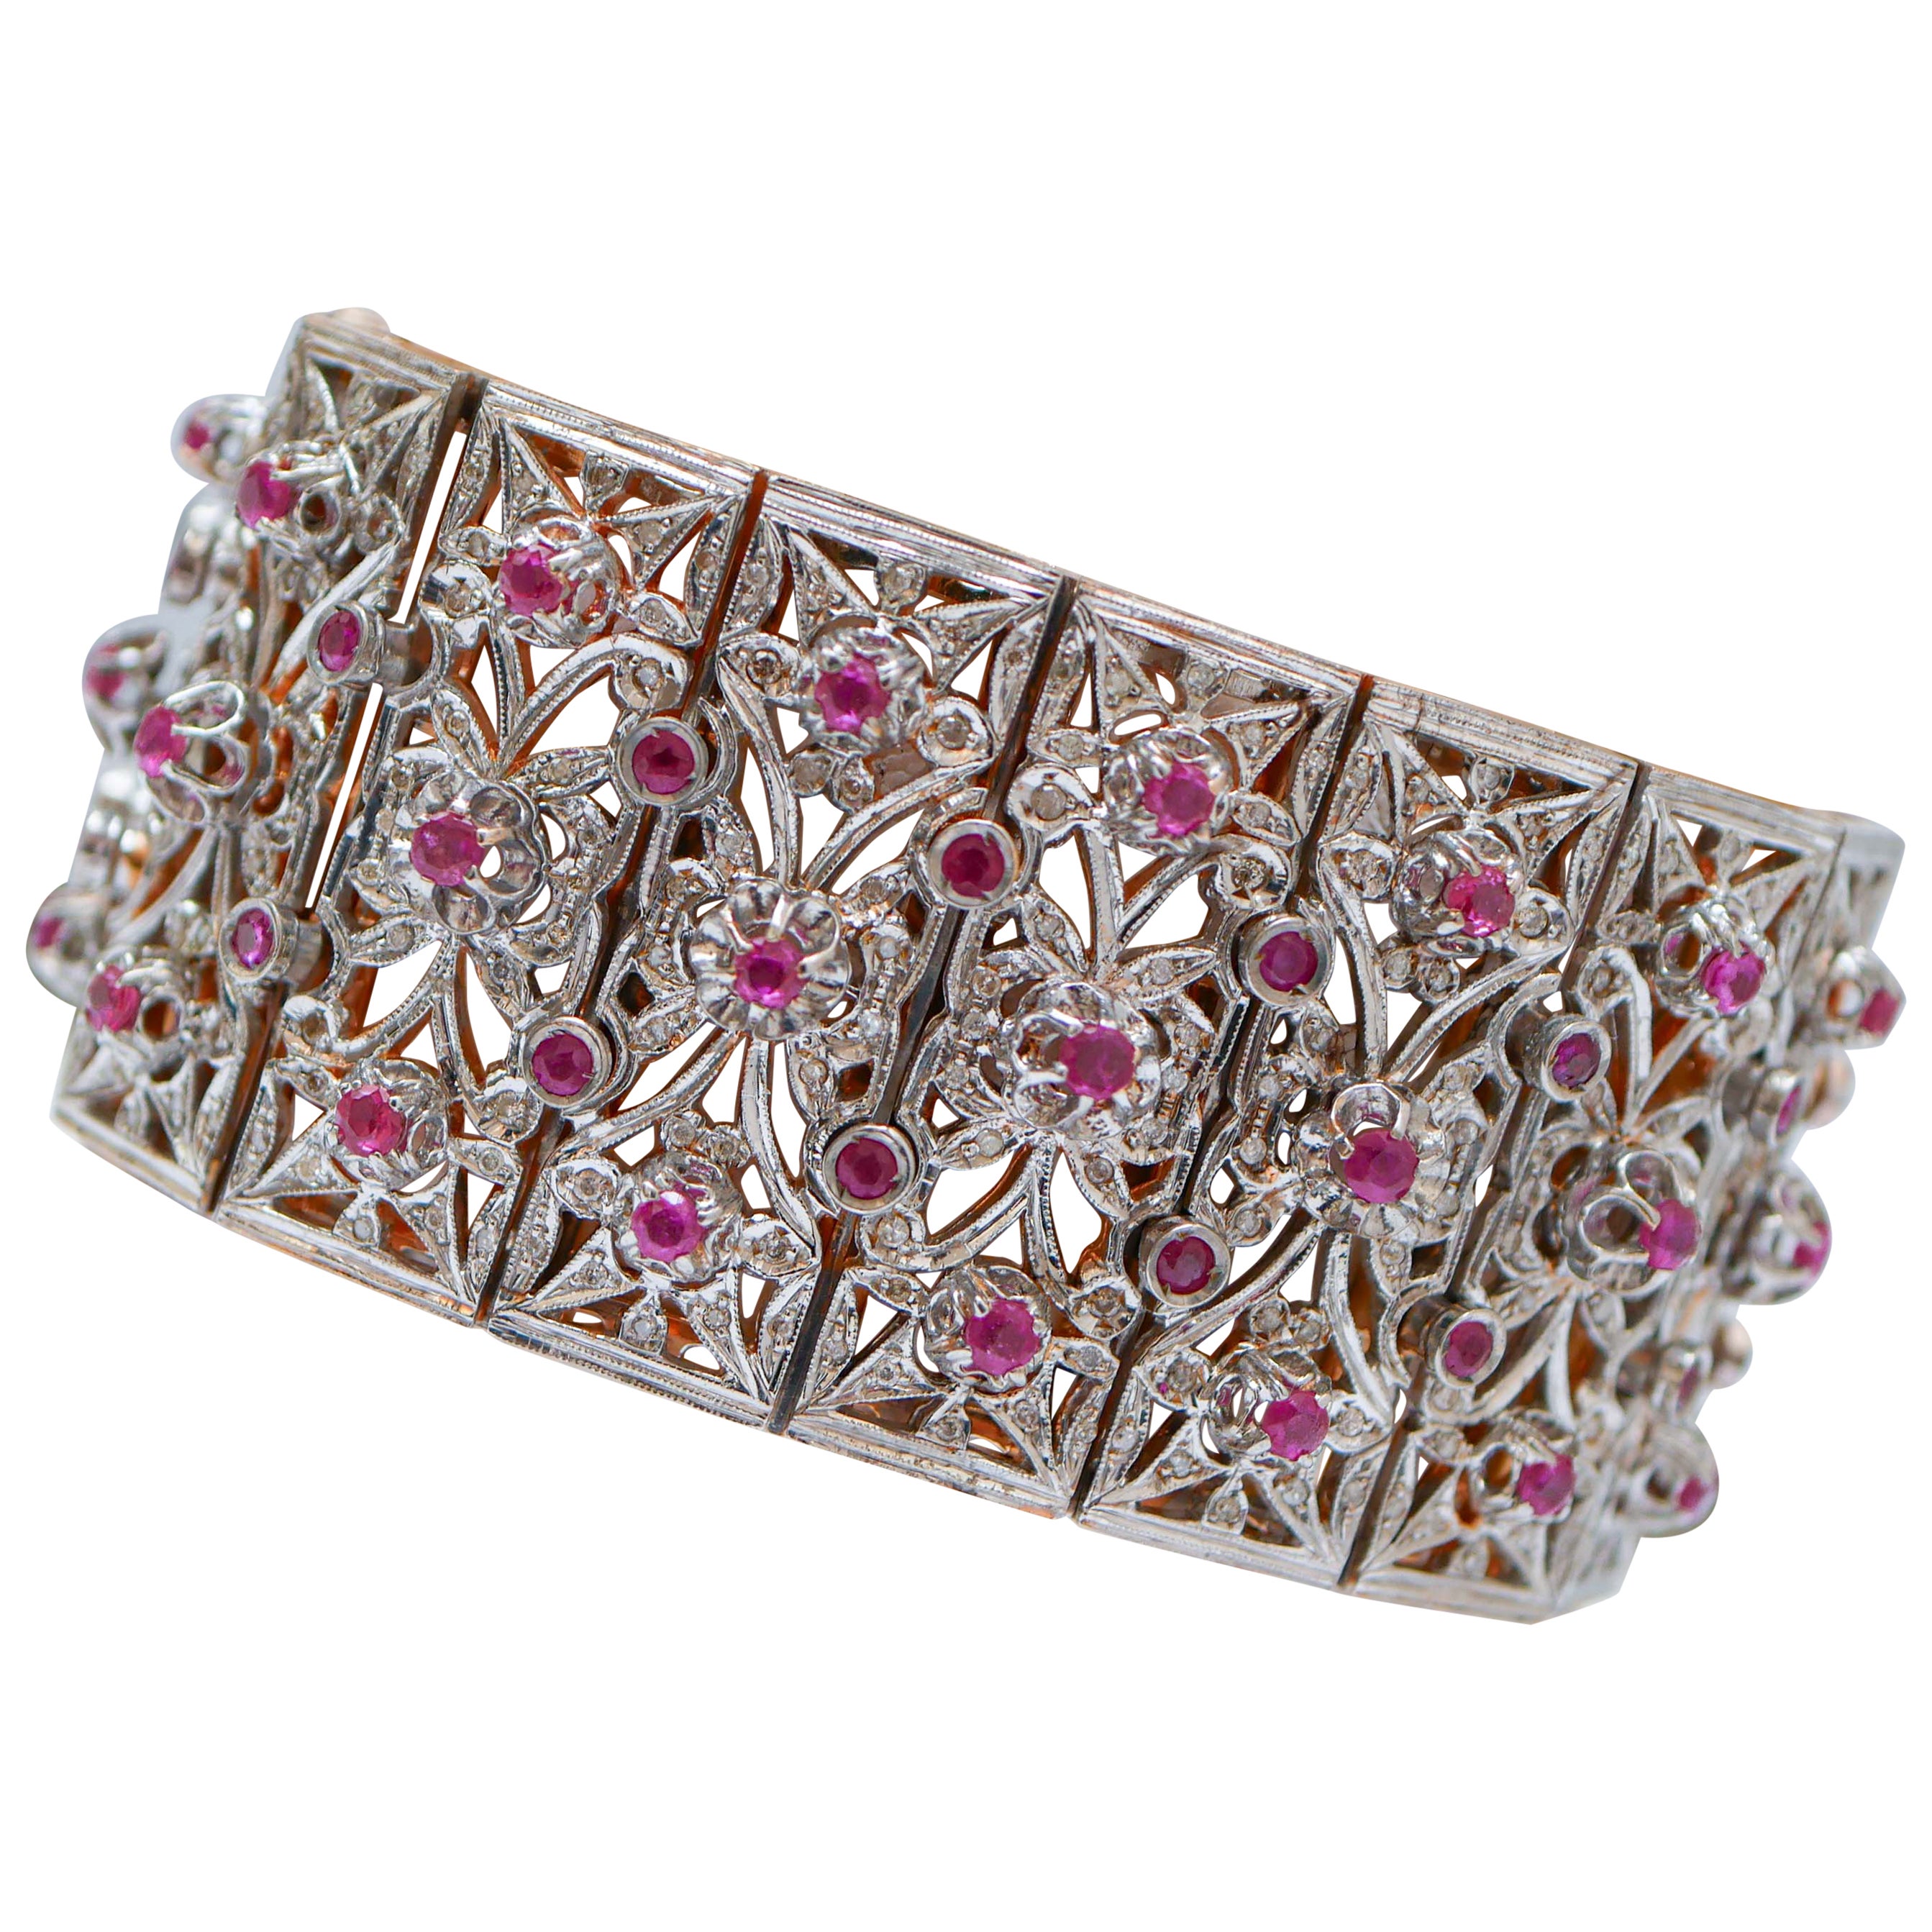 Rubies, Diamonds, Rose Gold and Silver Retrò Bracelet. For Sale